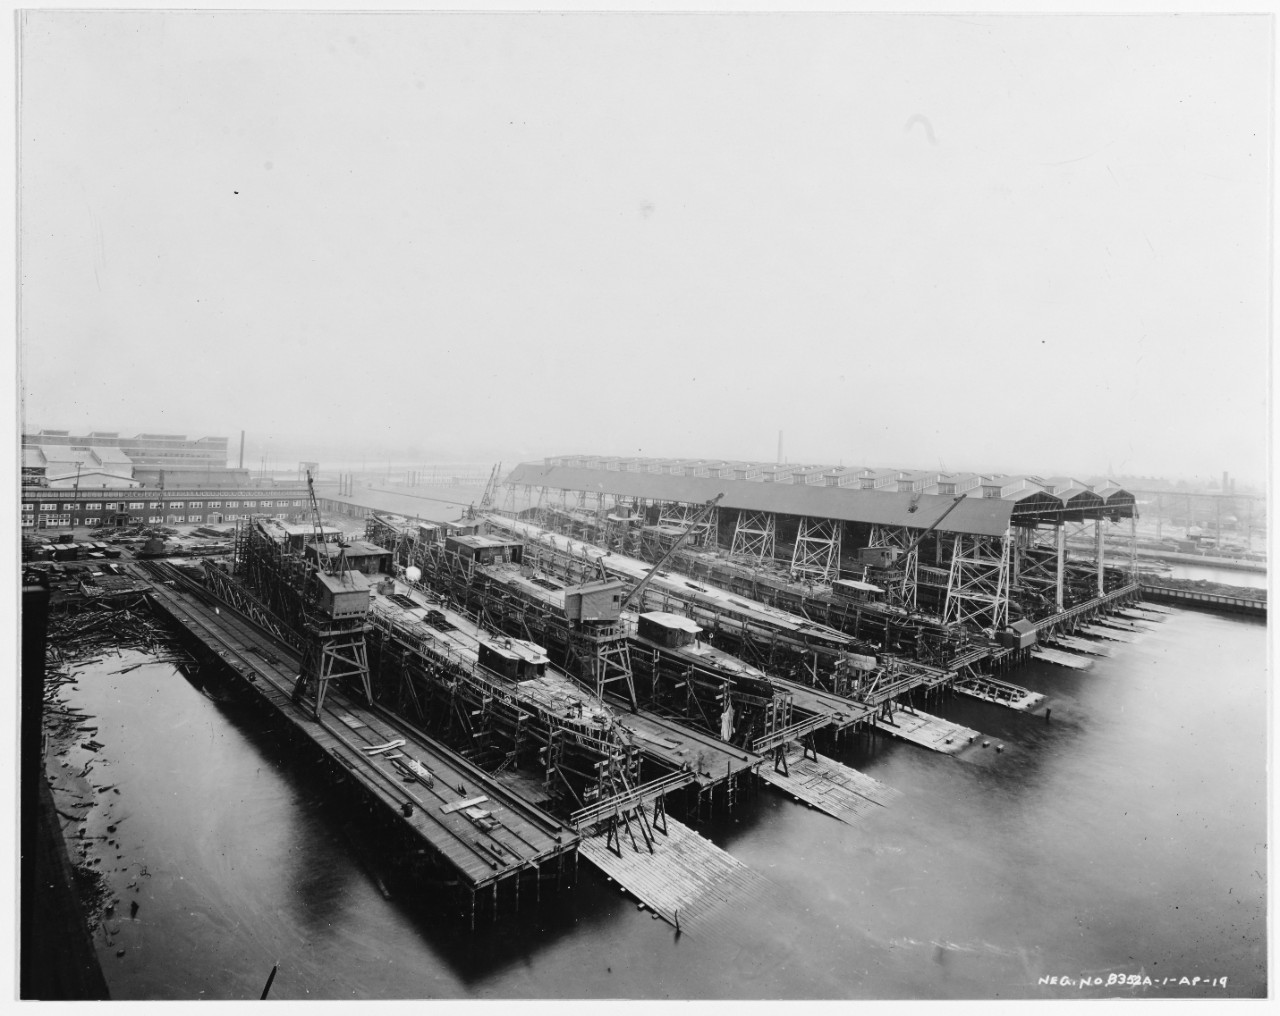 New York Shipbuilding Corp., Camden, New Jersey.